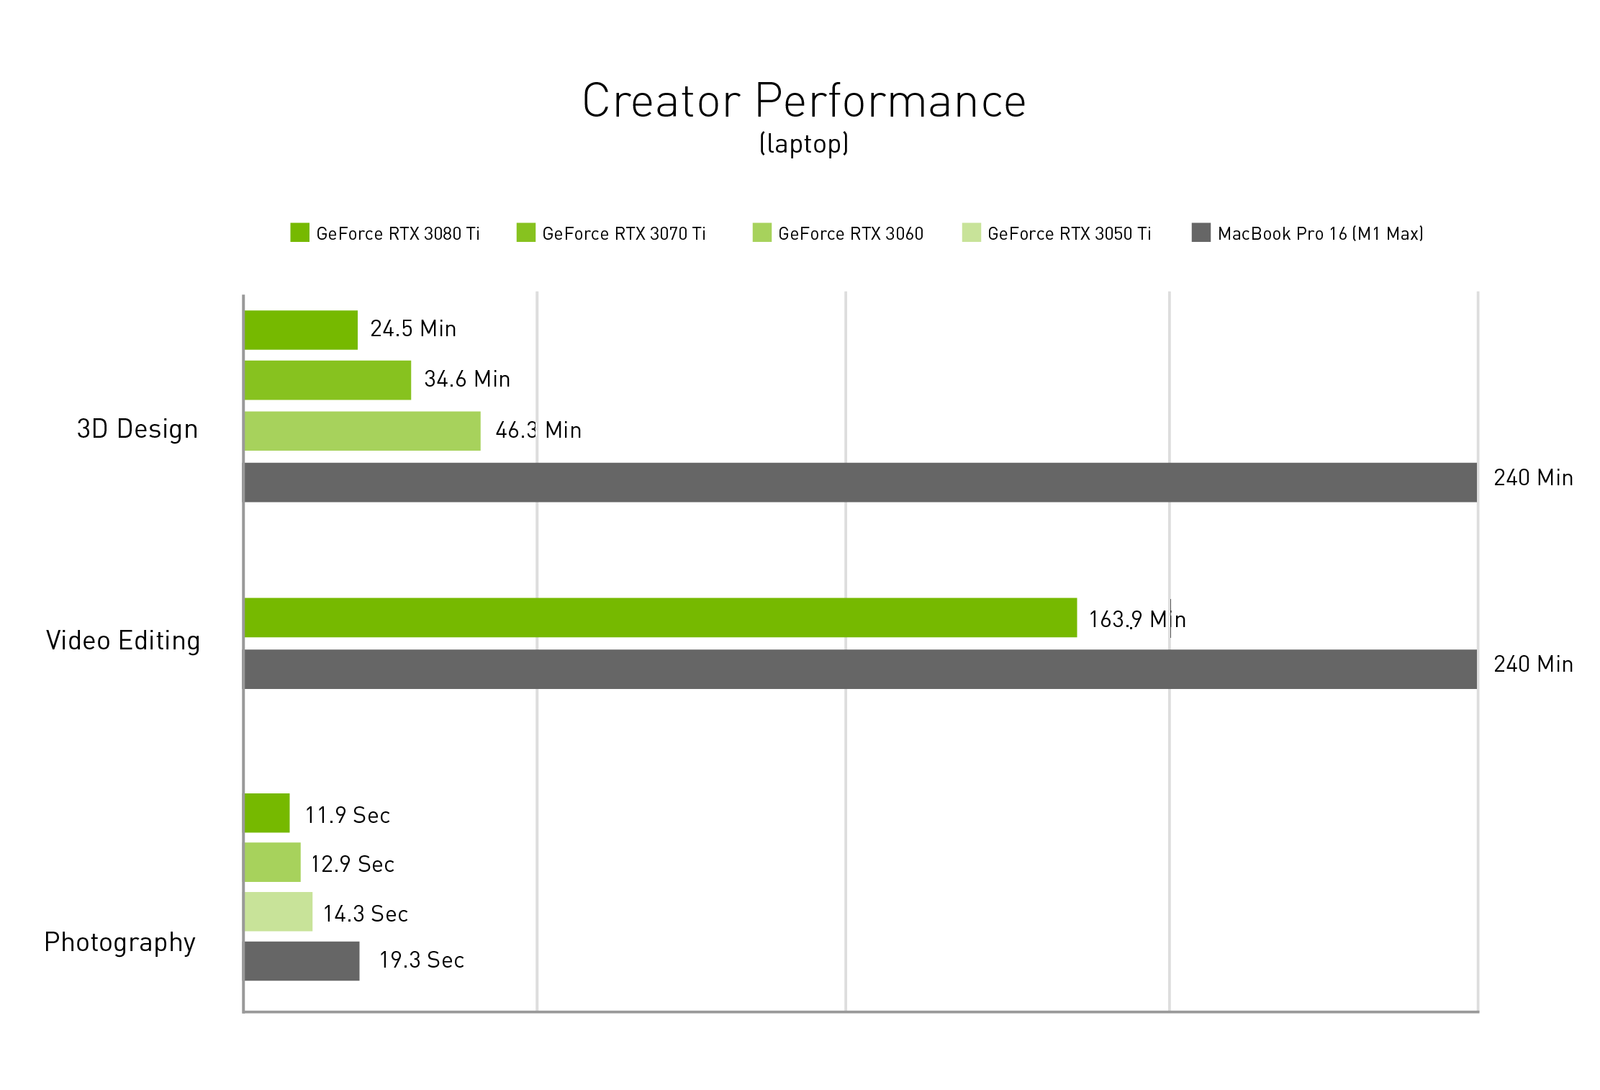 nvidia studio creators perf charts 12292021 creators performance lgt @2x 1 result MMOSITE - Thông tin công nghệ, review, thủ thuật PC, gaming